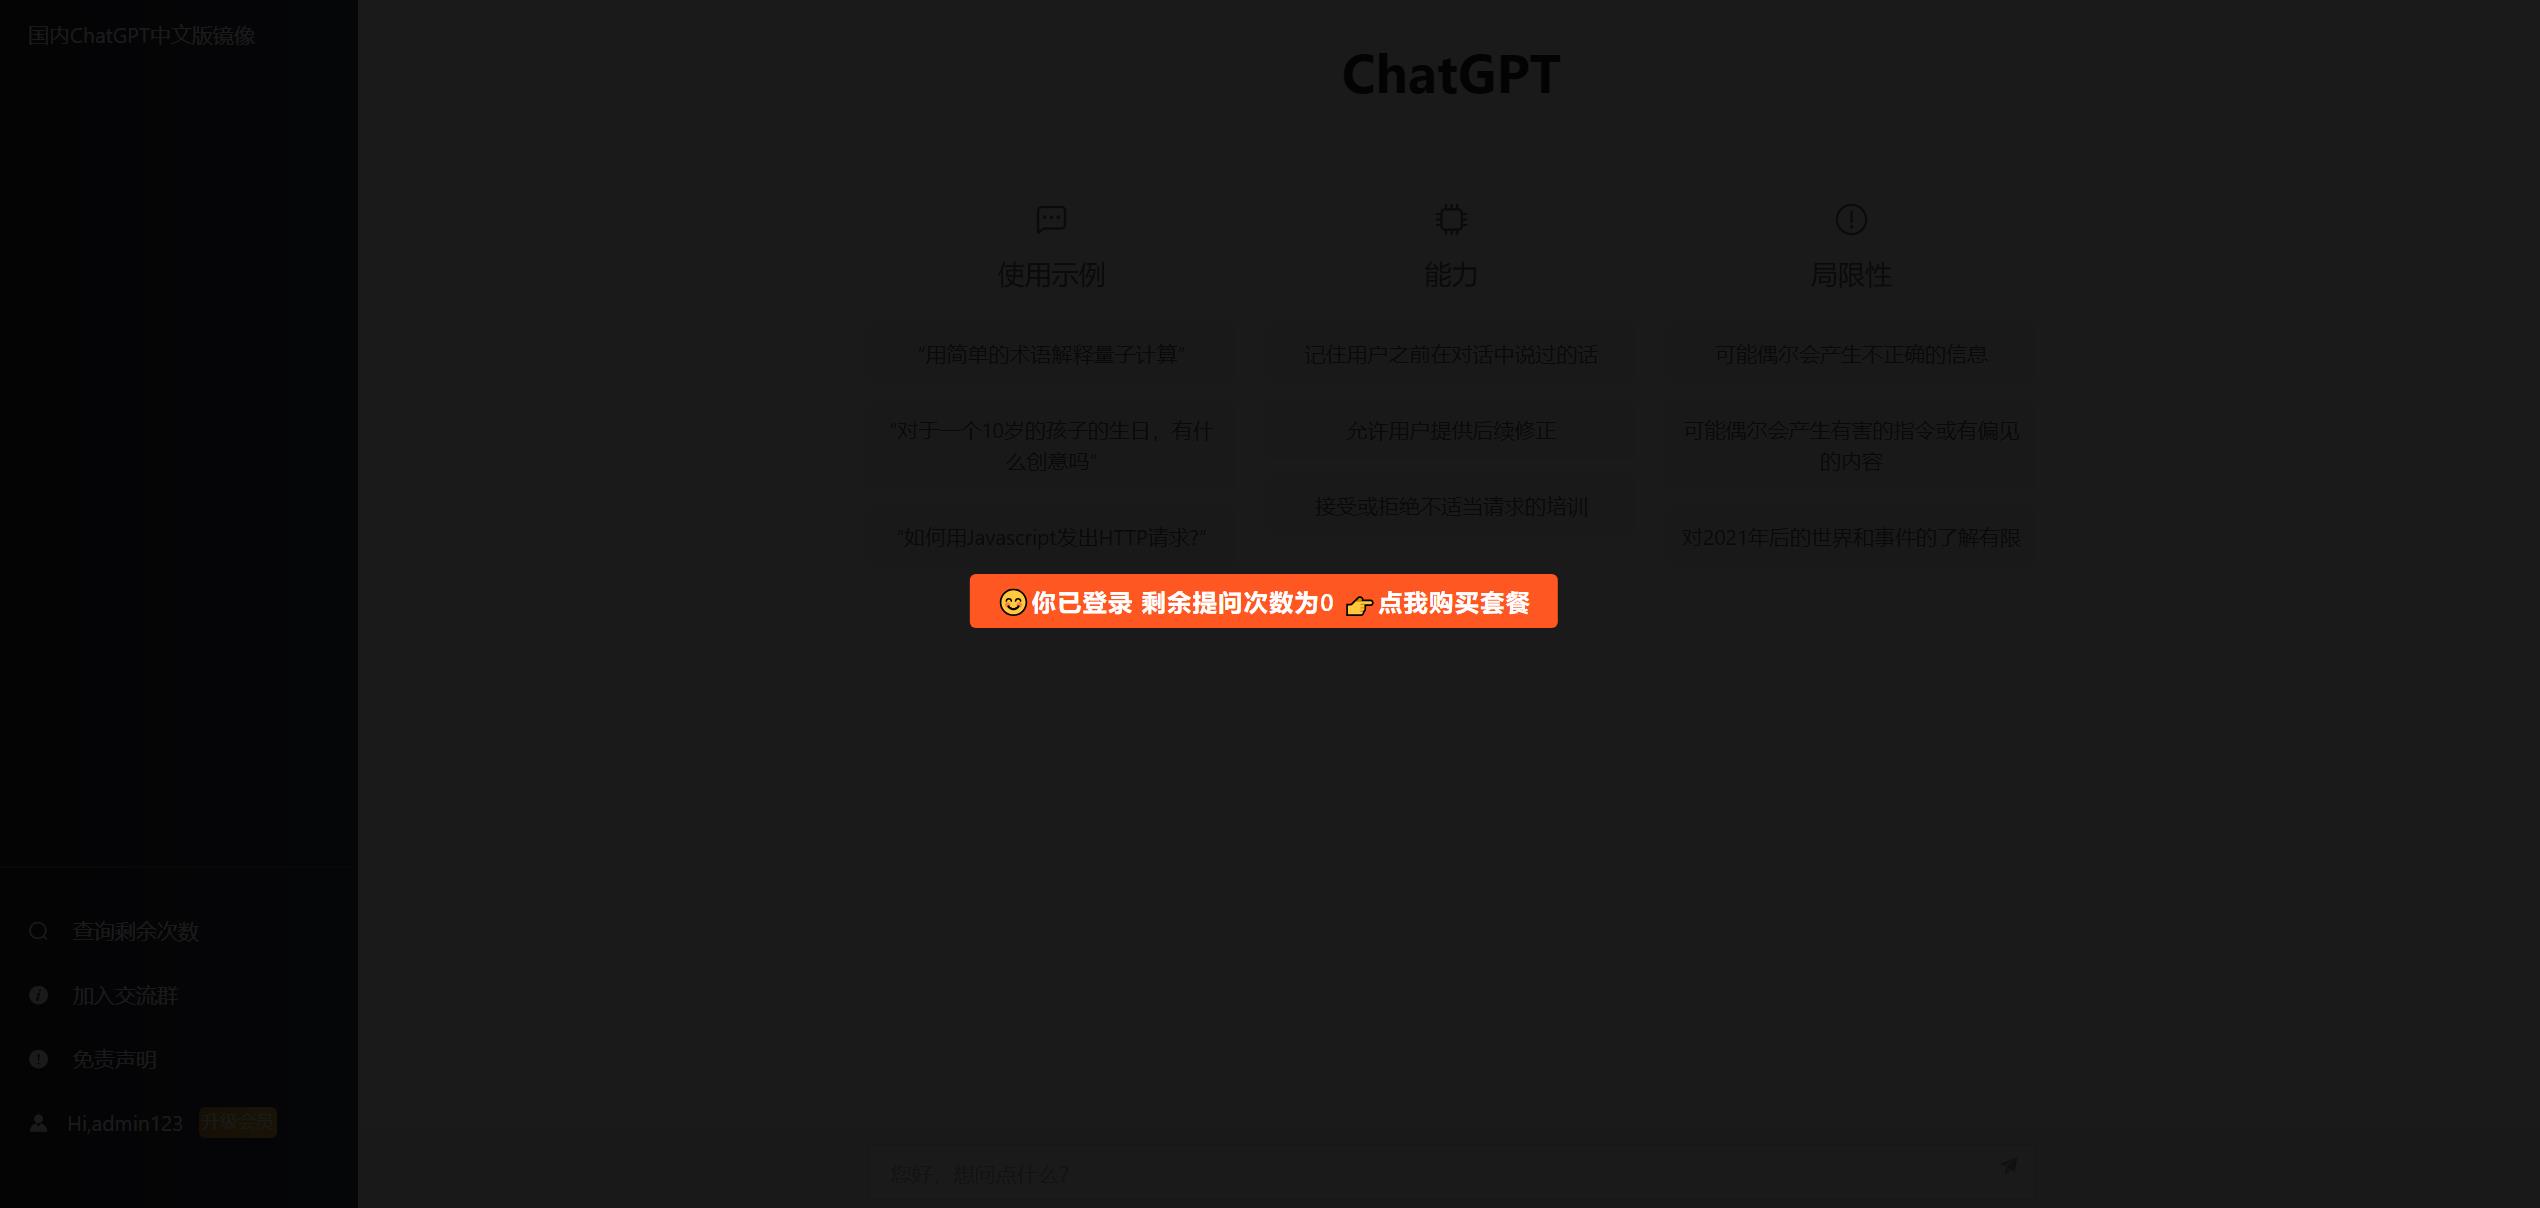 ChatGPT网站的最新版本已经发布，这个版本支持用户购买付费套餐，并且用户可以通过该网站赚取收益。插图1